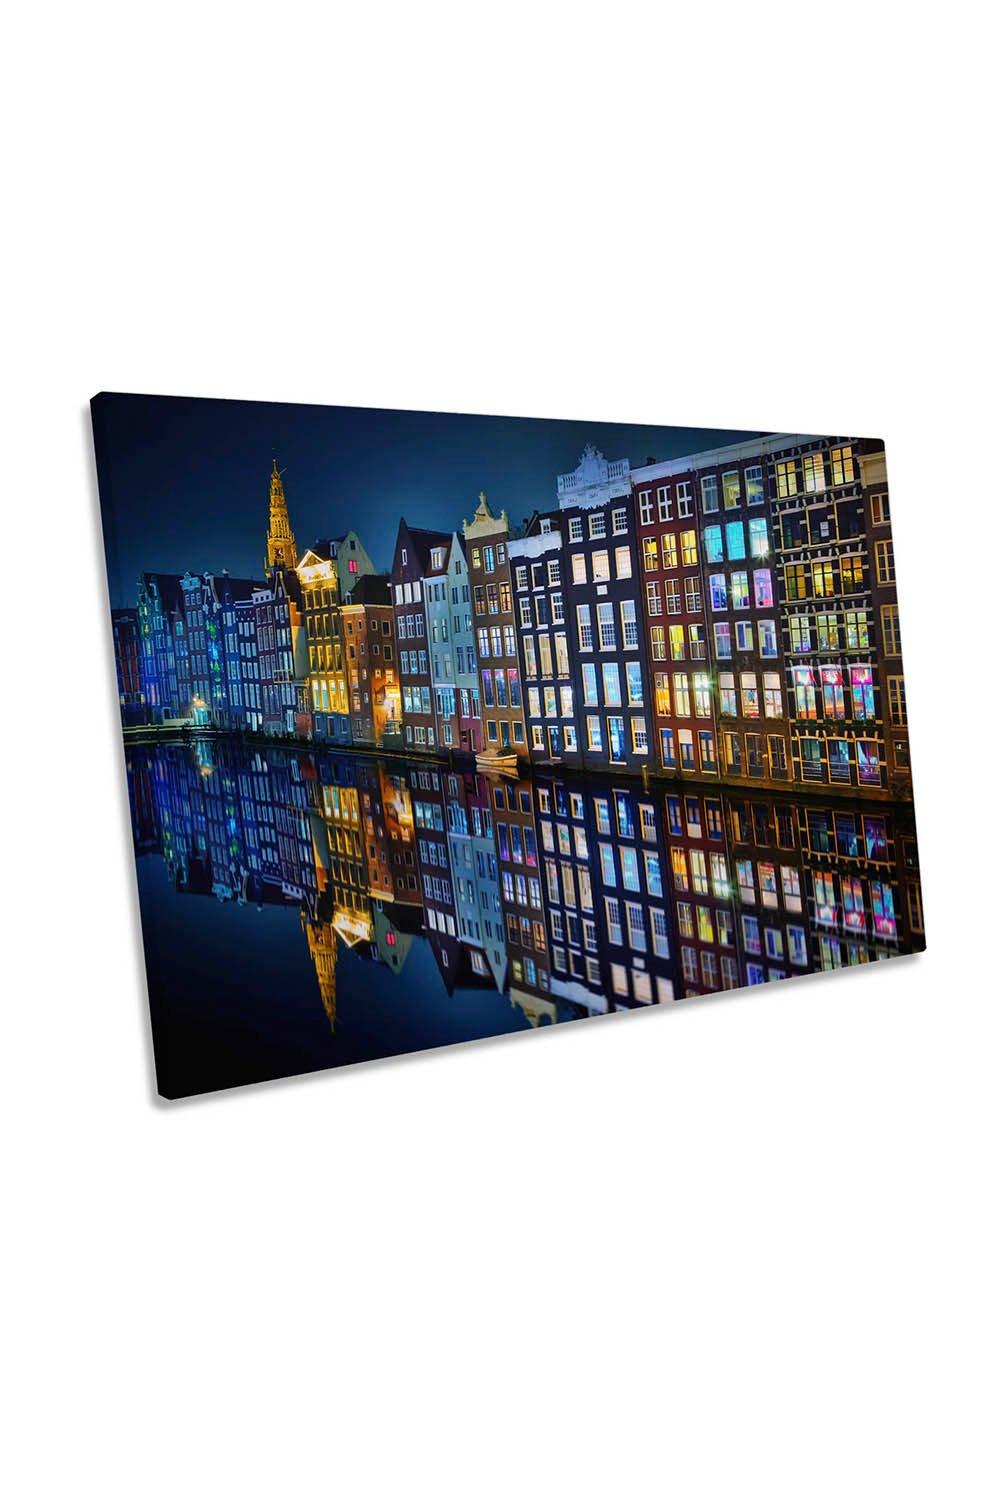 Amsterdam Mirror City Night Canvas Wall Art Picture Print